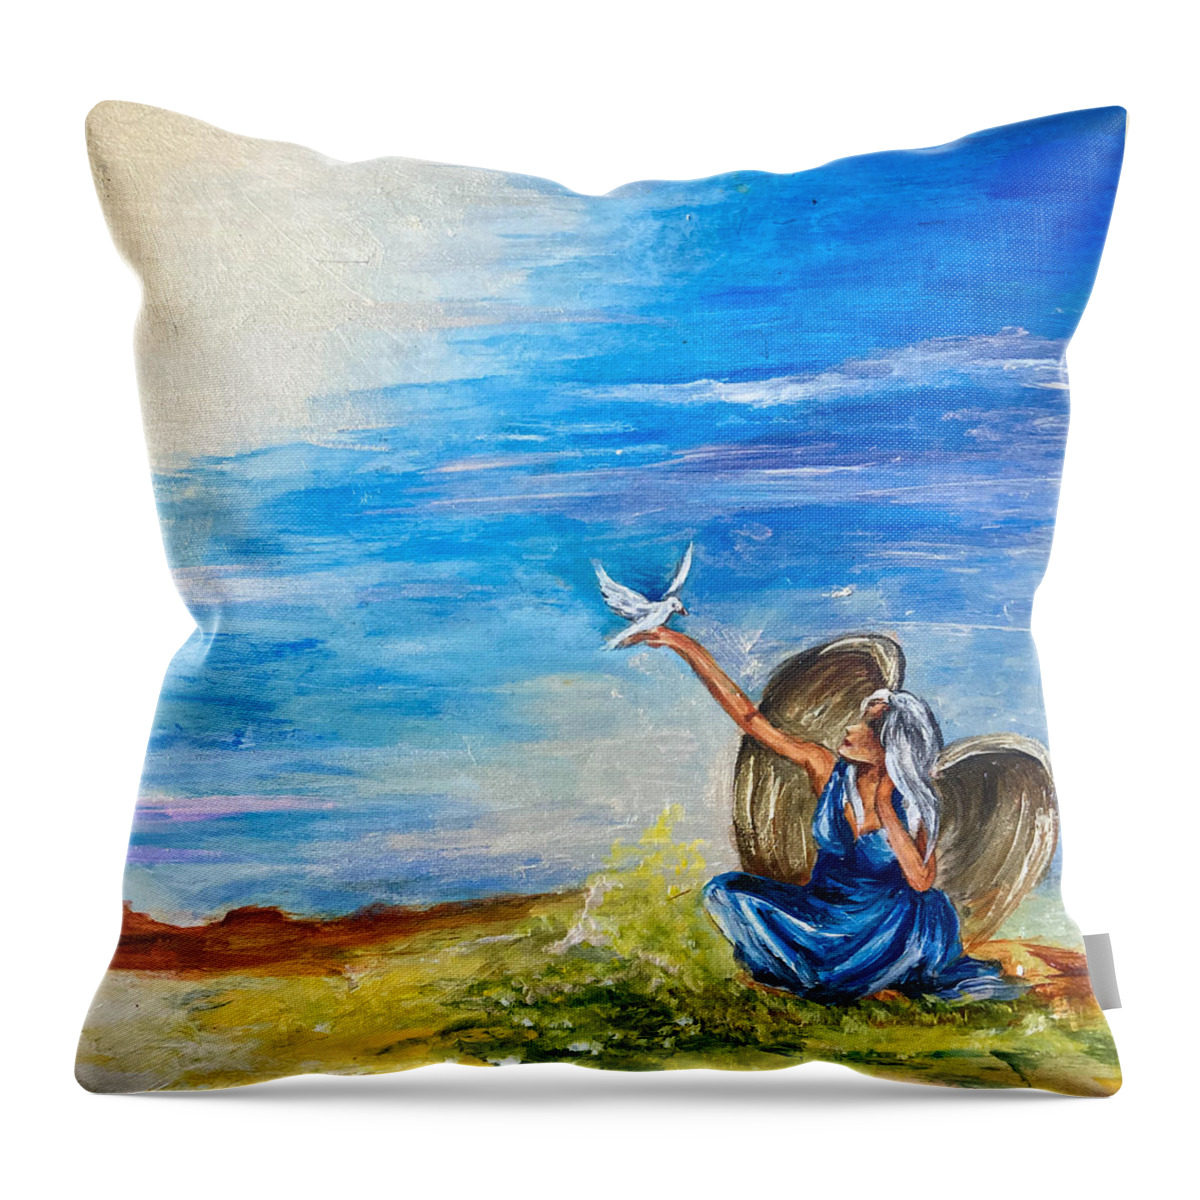 Angel Throw Pillow featuring the painting Peaceful Guardian by Karen Ferrand Carroll